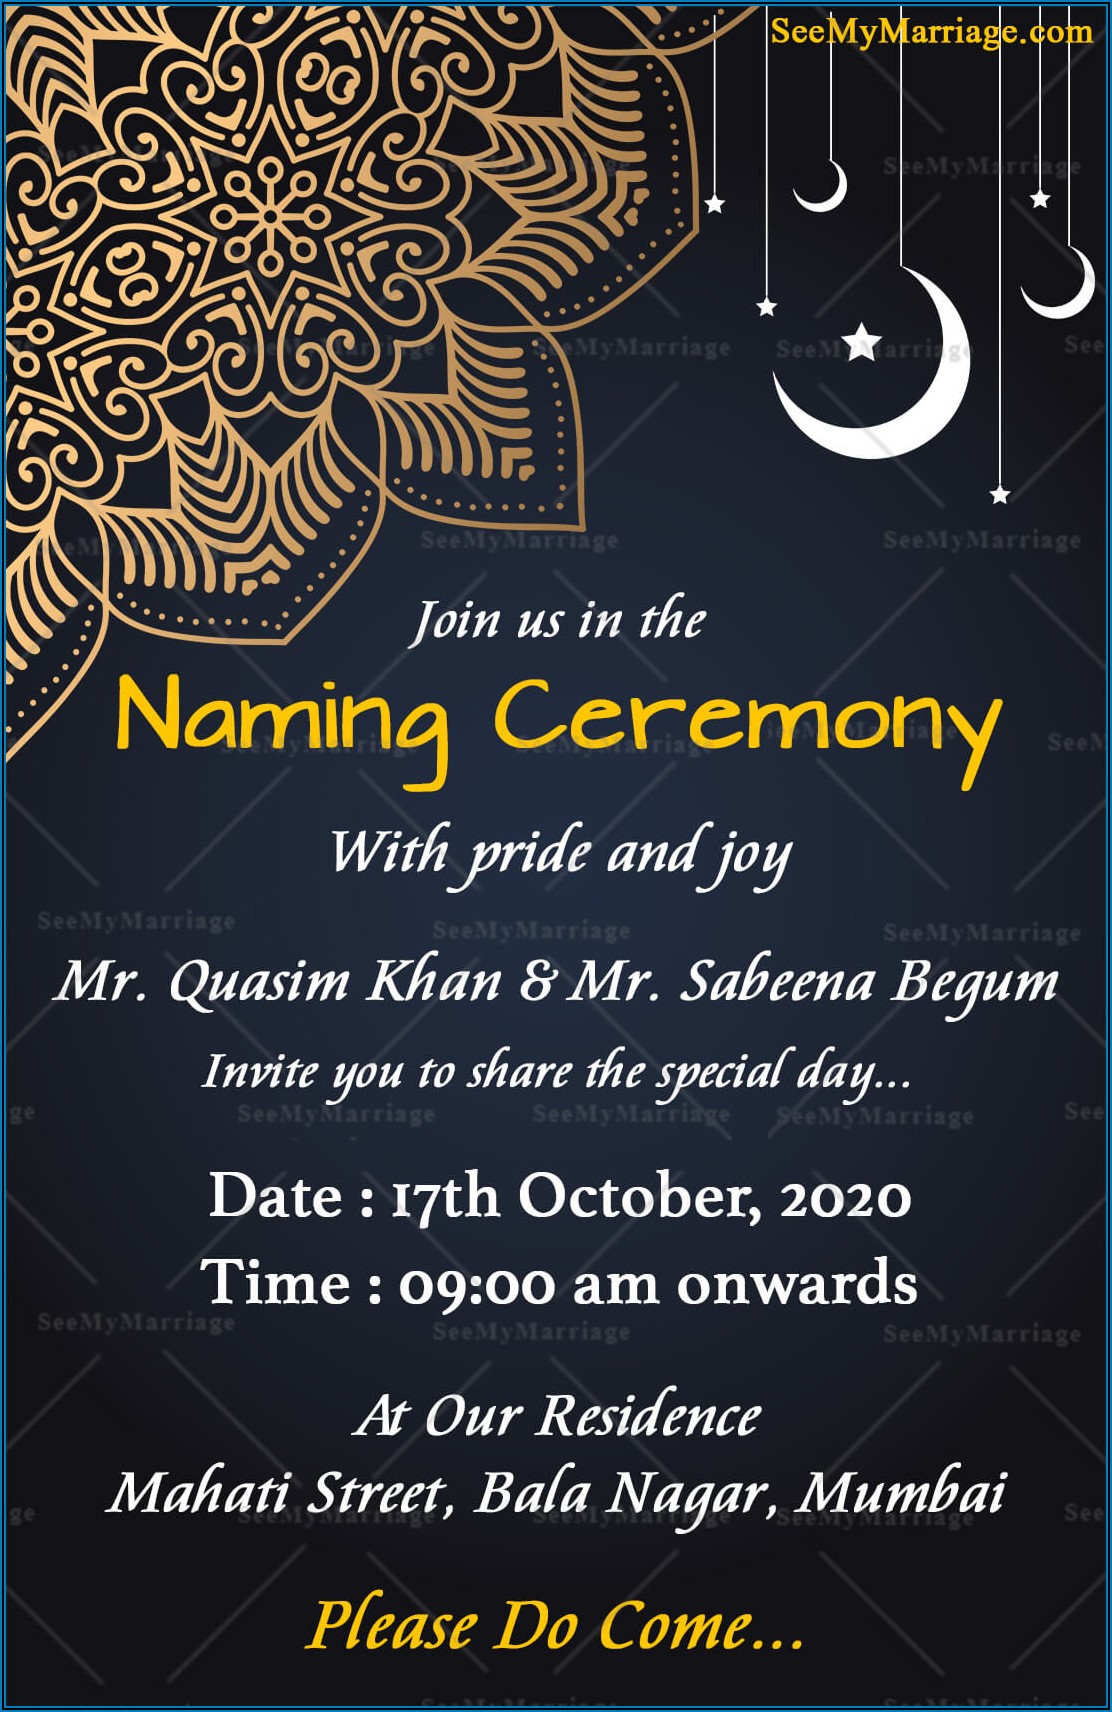 Naming Ceremony Invitation Card Background